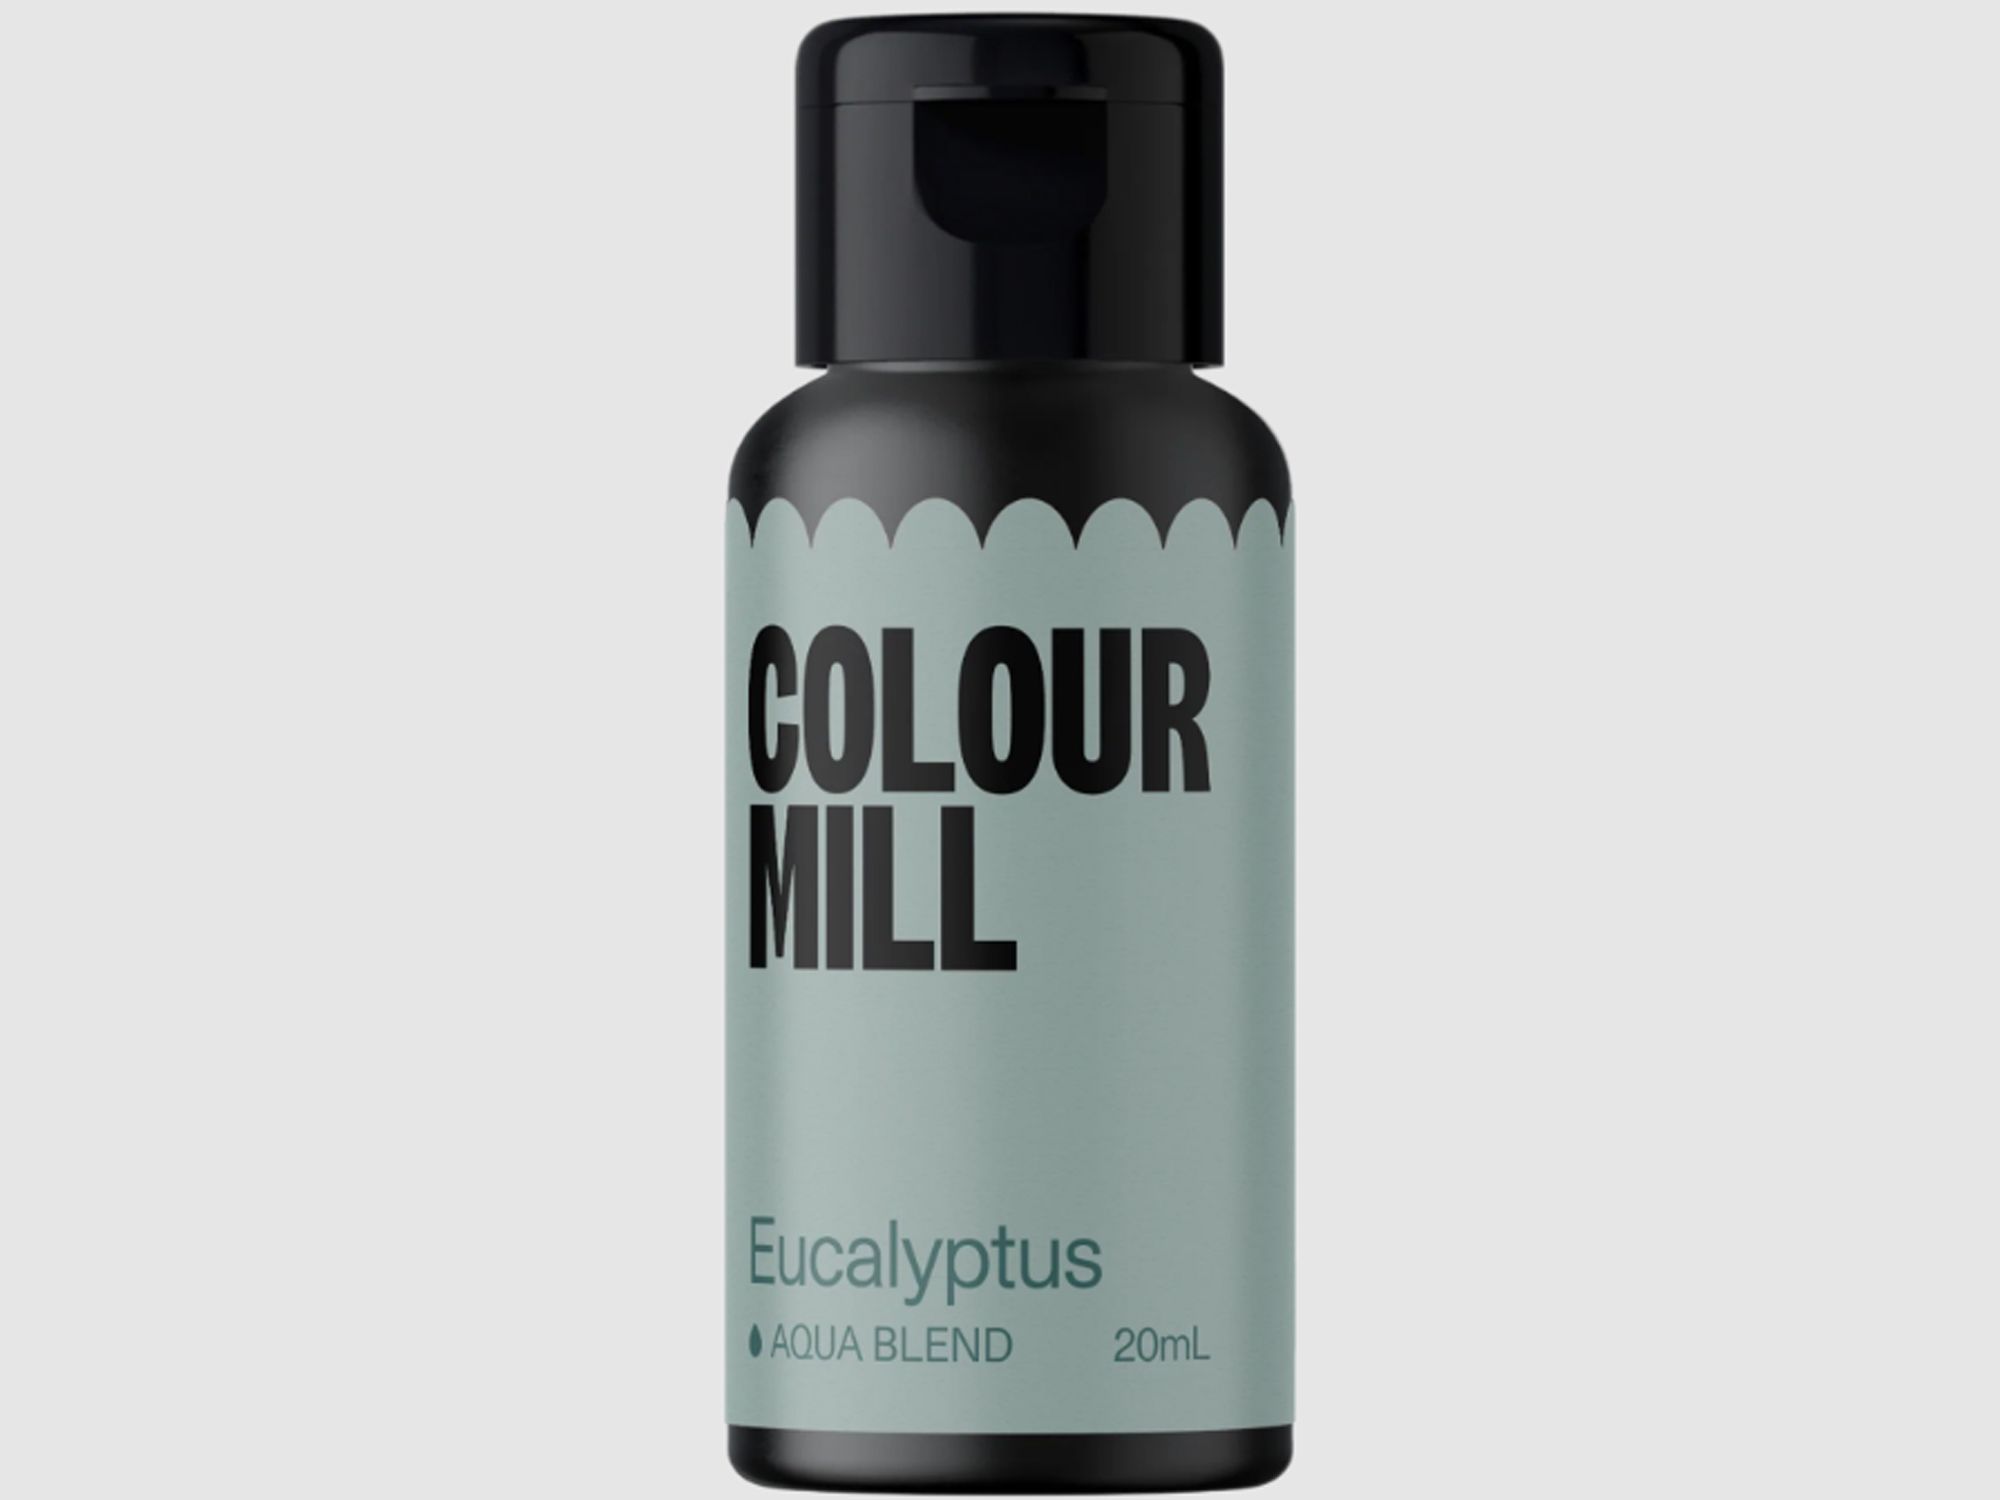 Colour Mill Eucalyptus (Aqua Blend) 20ml